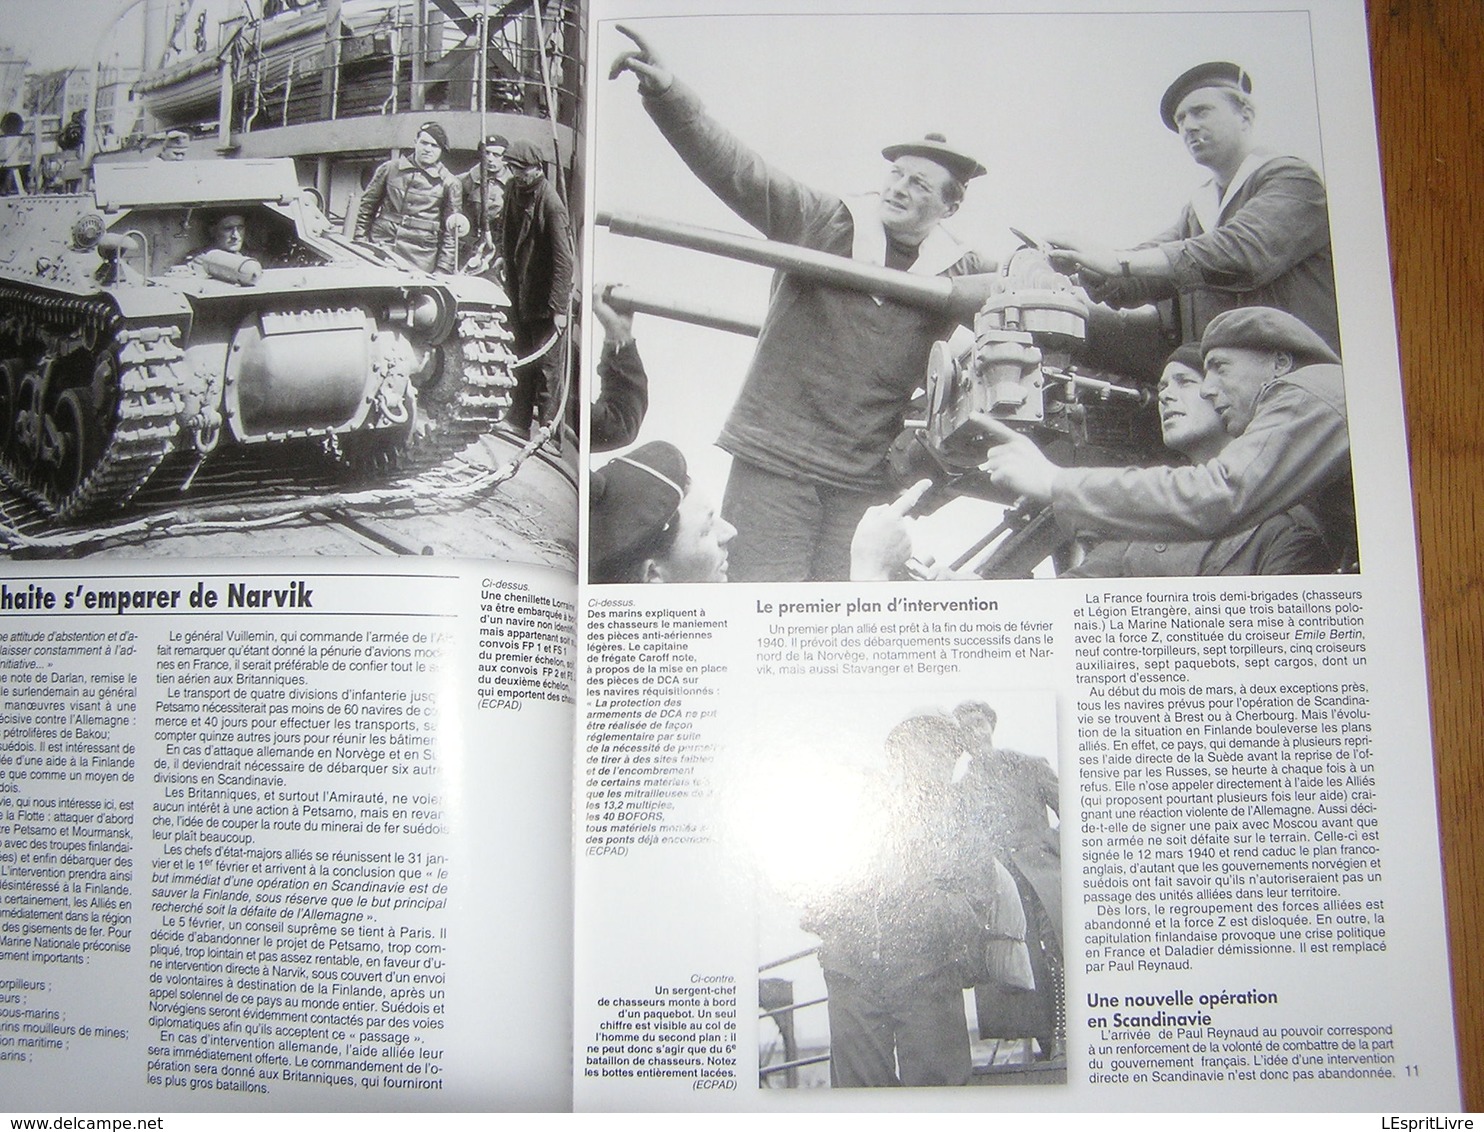 ARMES MILITARIA Magazine Hors Série N° 49 Guerre 40 45 Norvège 1940 Narvik Danemark Oslo Corps Expéditionnaire - Oorlog 1939-45